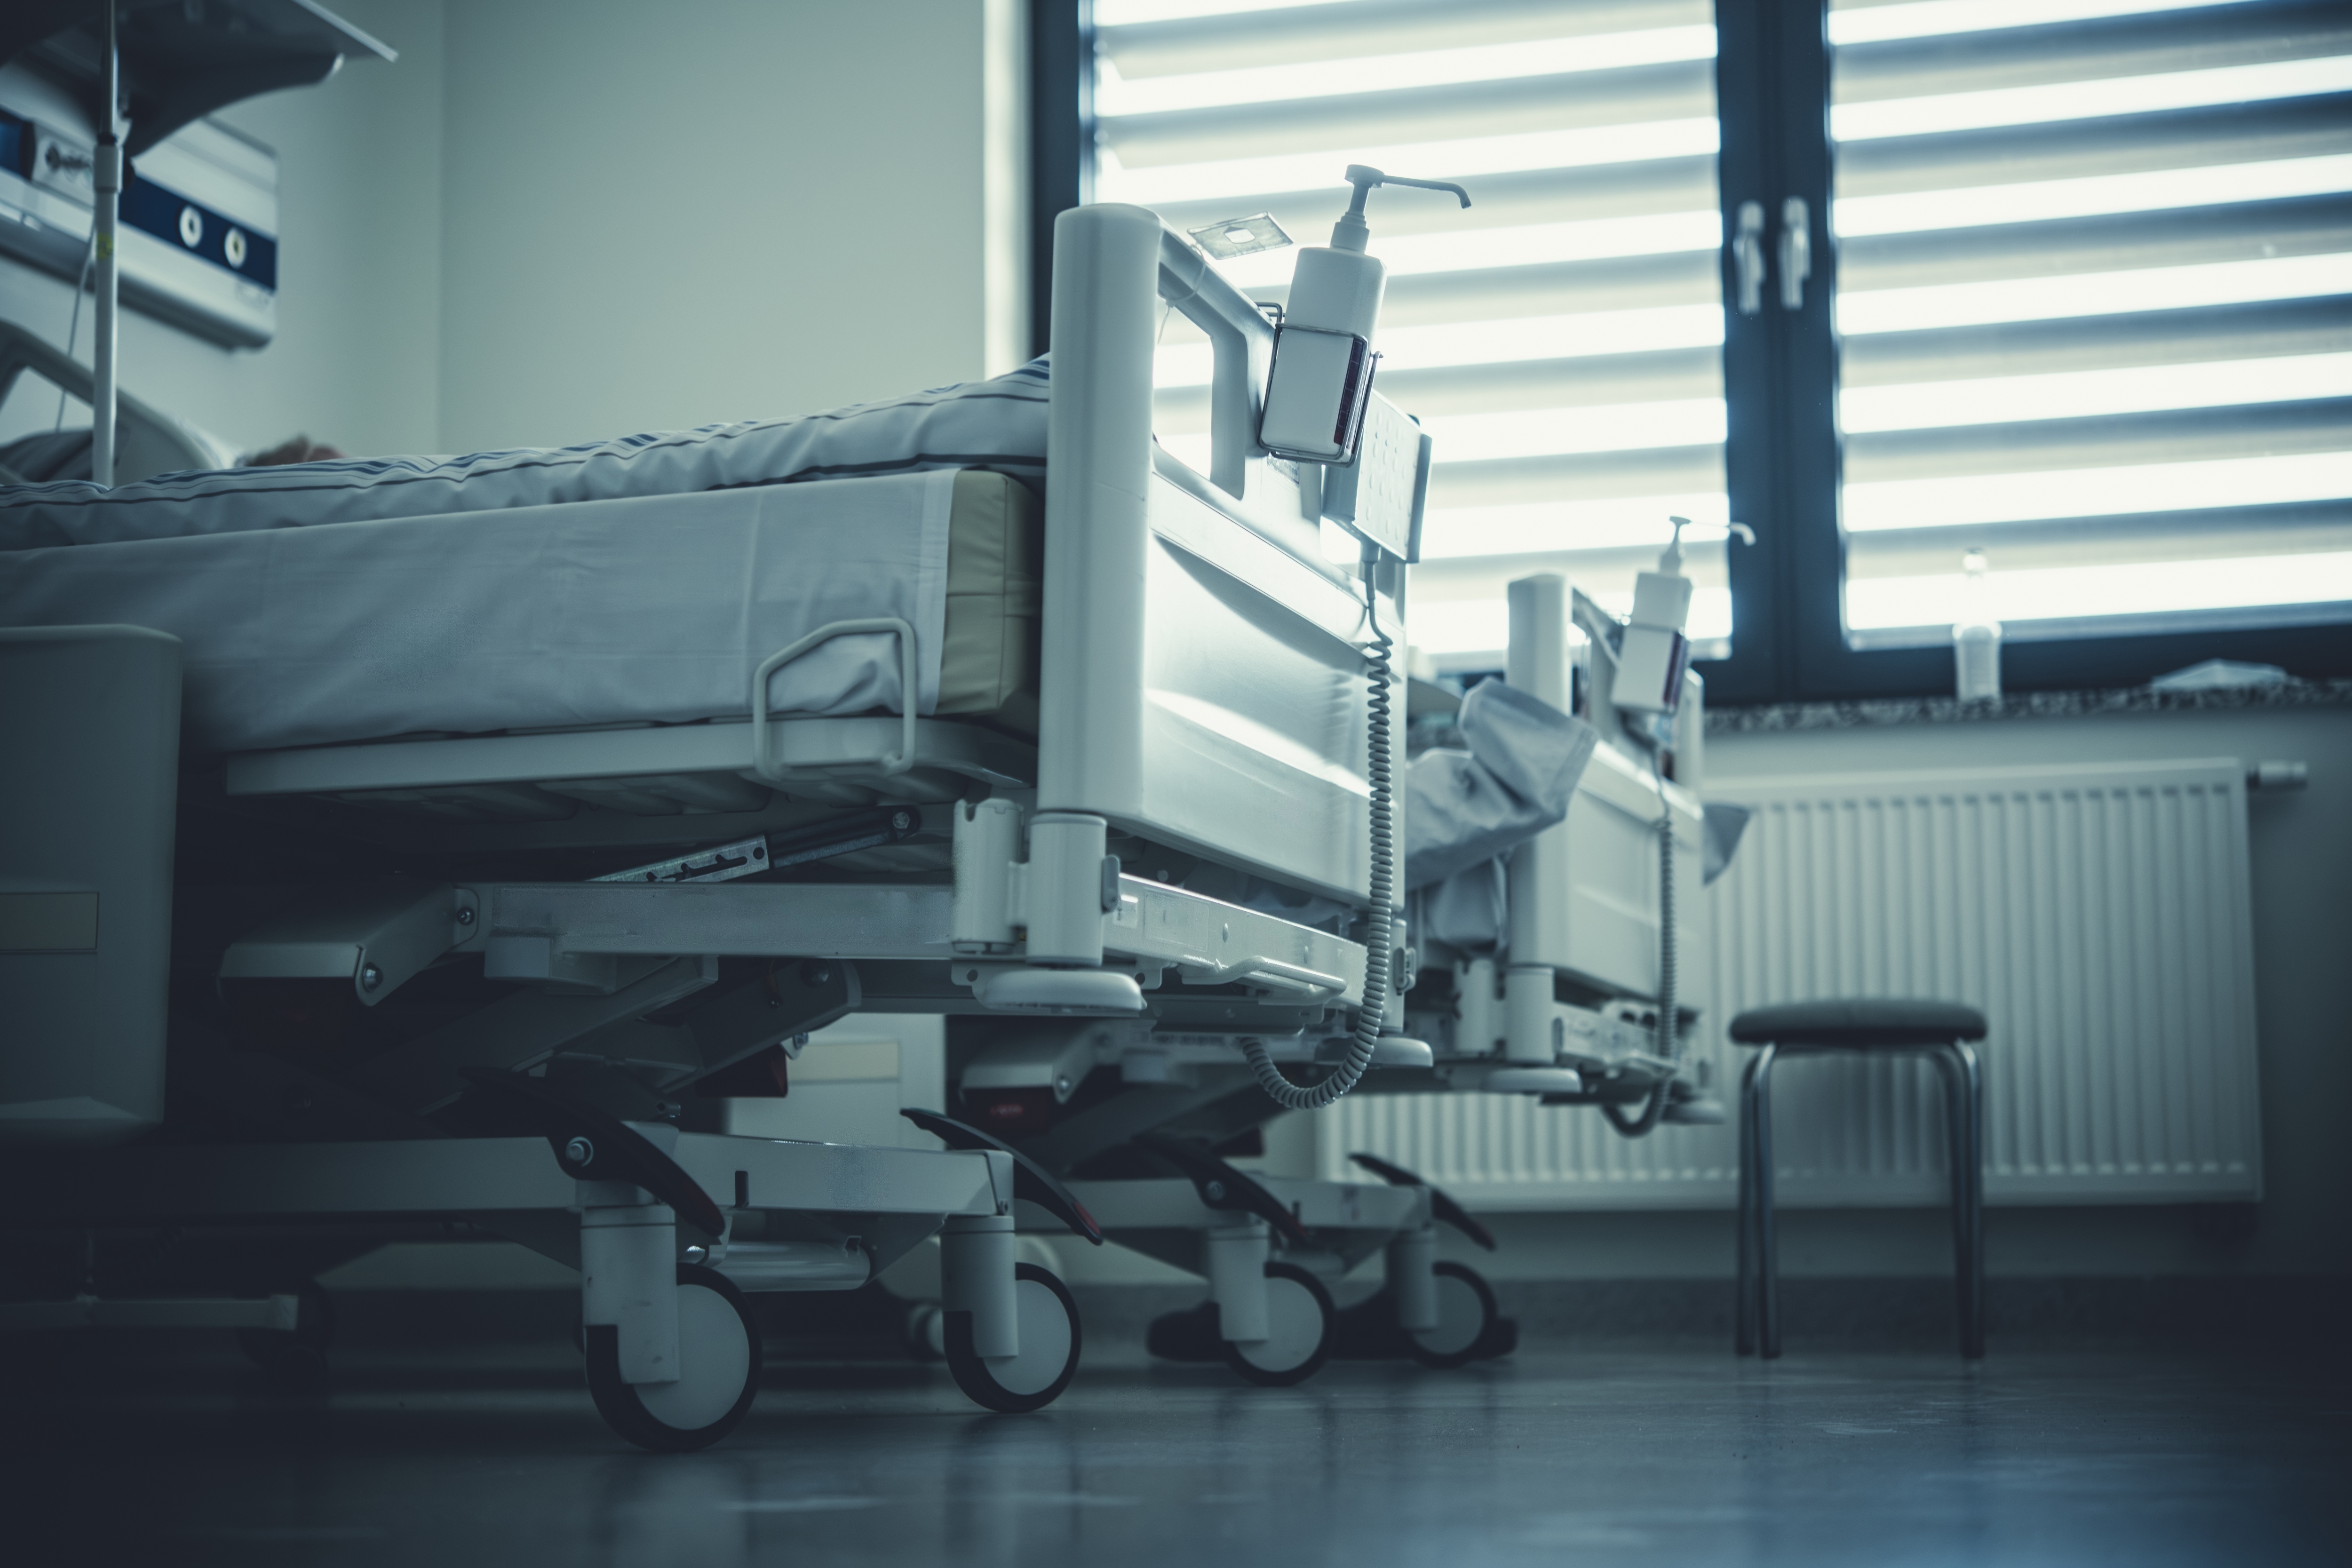 Hospital beds in hospital room. | Source: Shutterstock